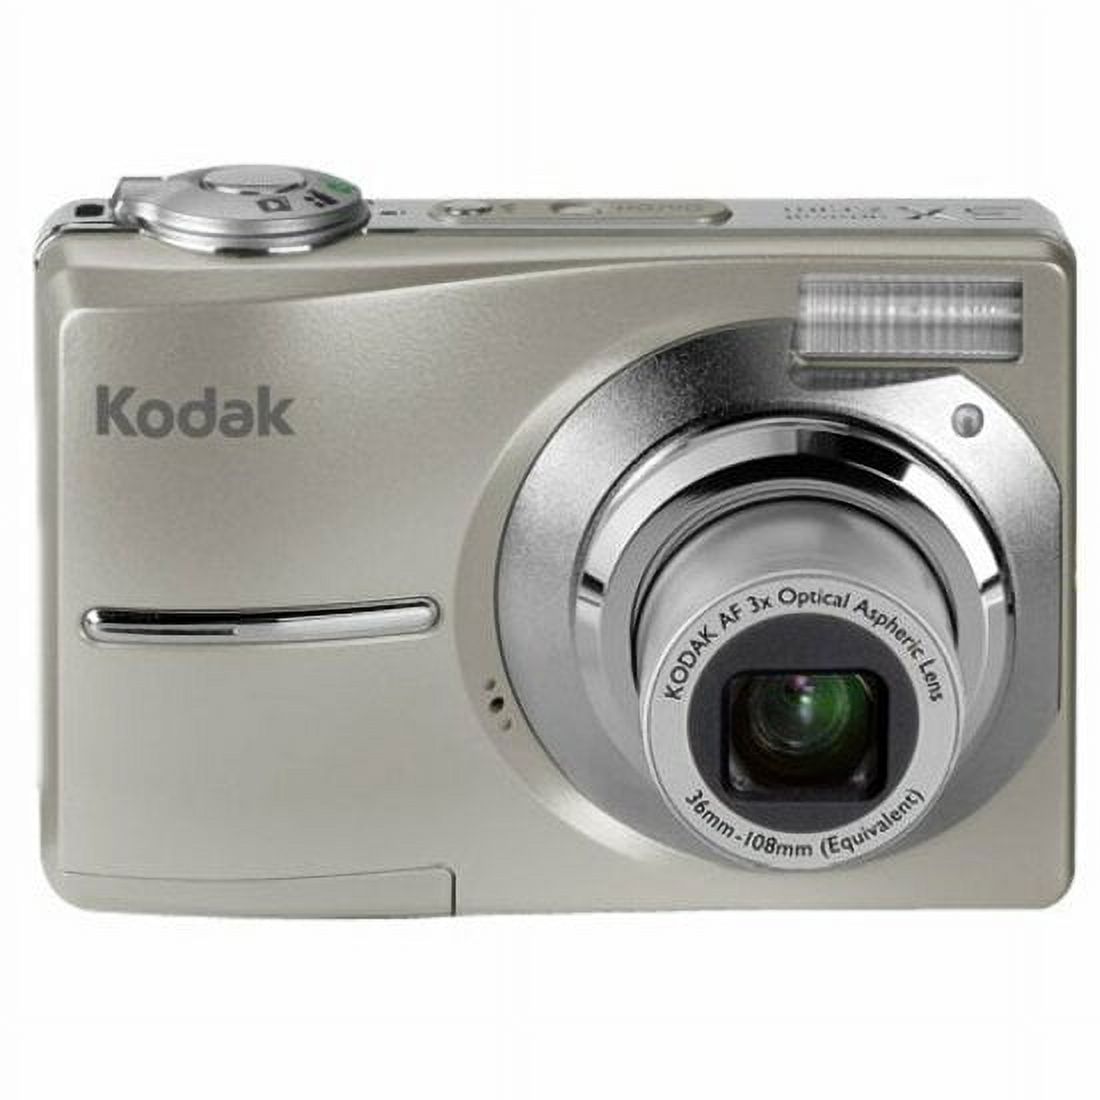 Kodak EasyShare C713 7 Megapixel Compact Camera, Silver - image 1 of 2